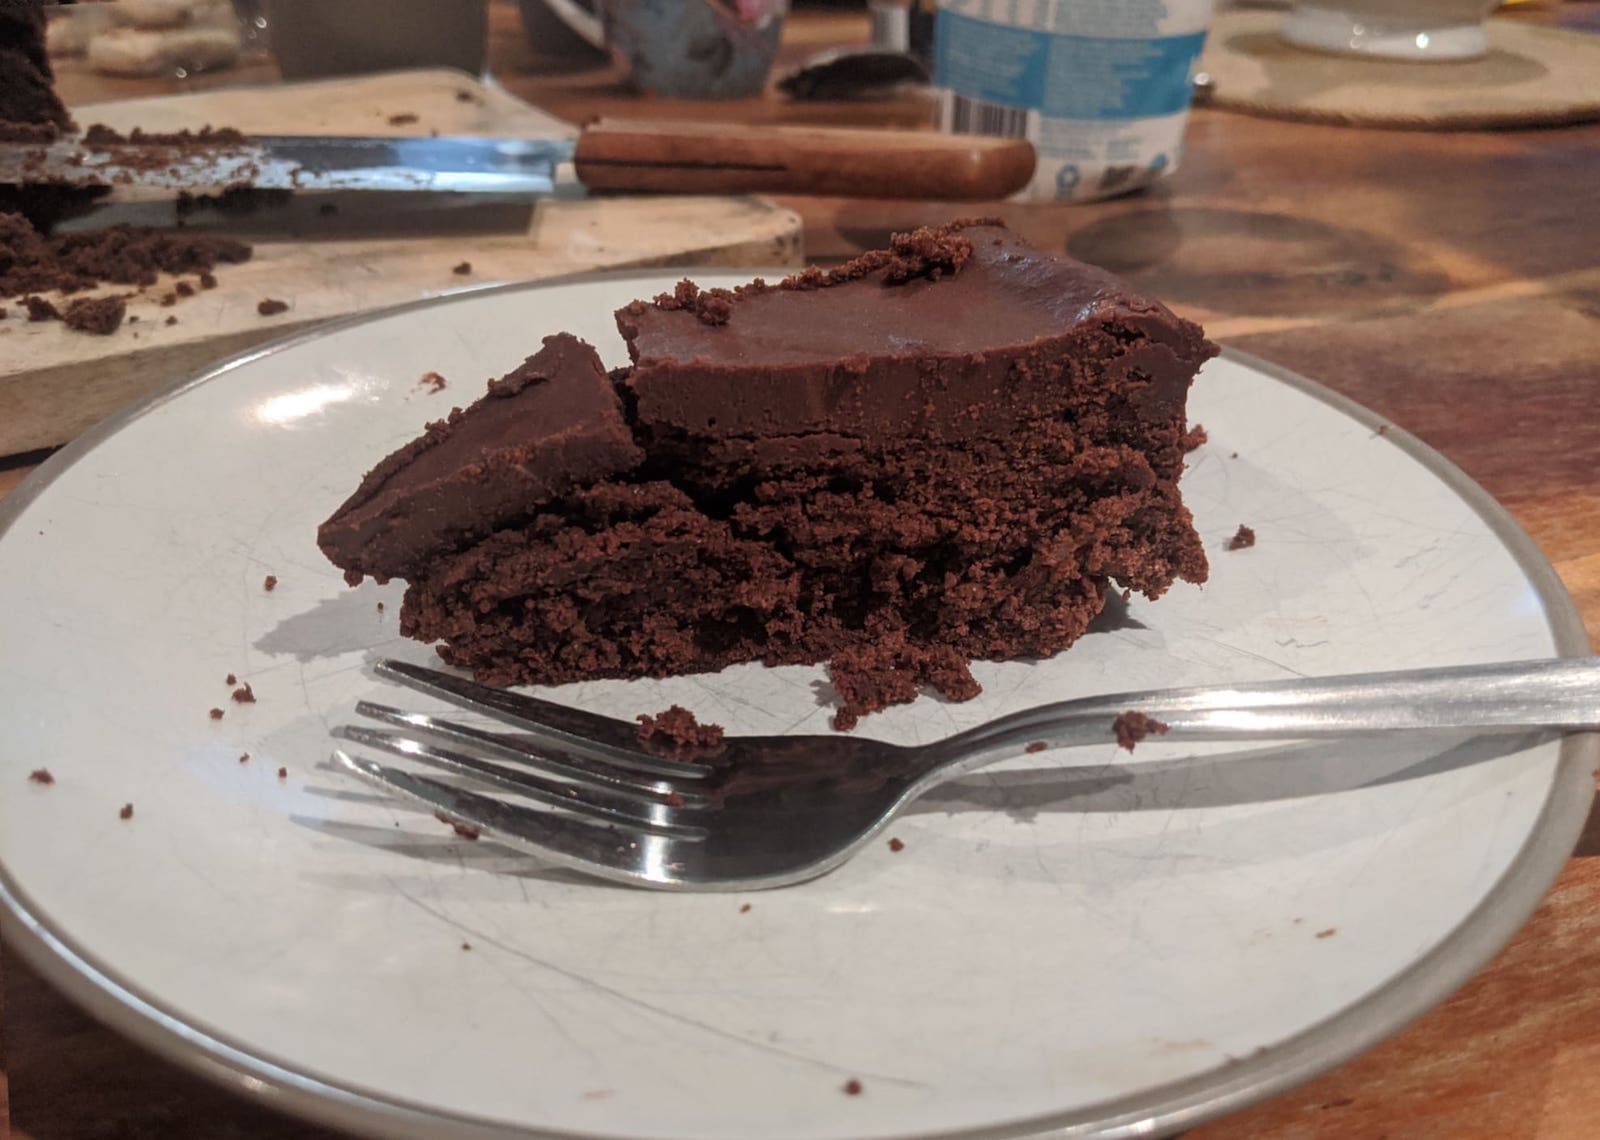 Making Tartine's Chocolate Mousse Cake at Home